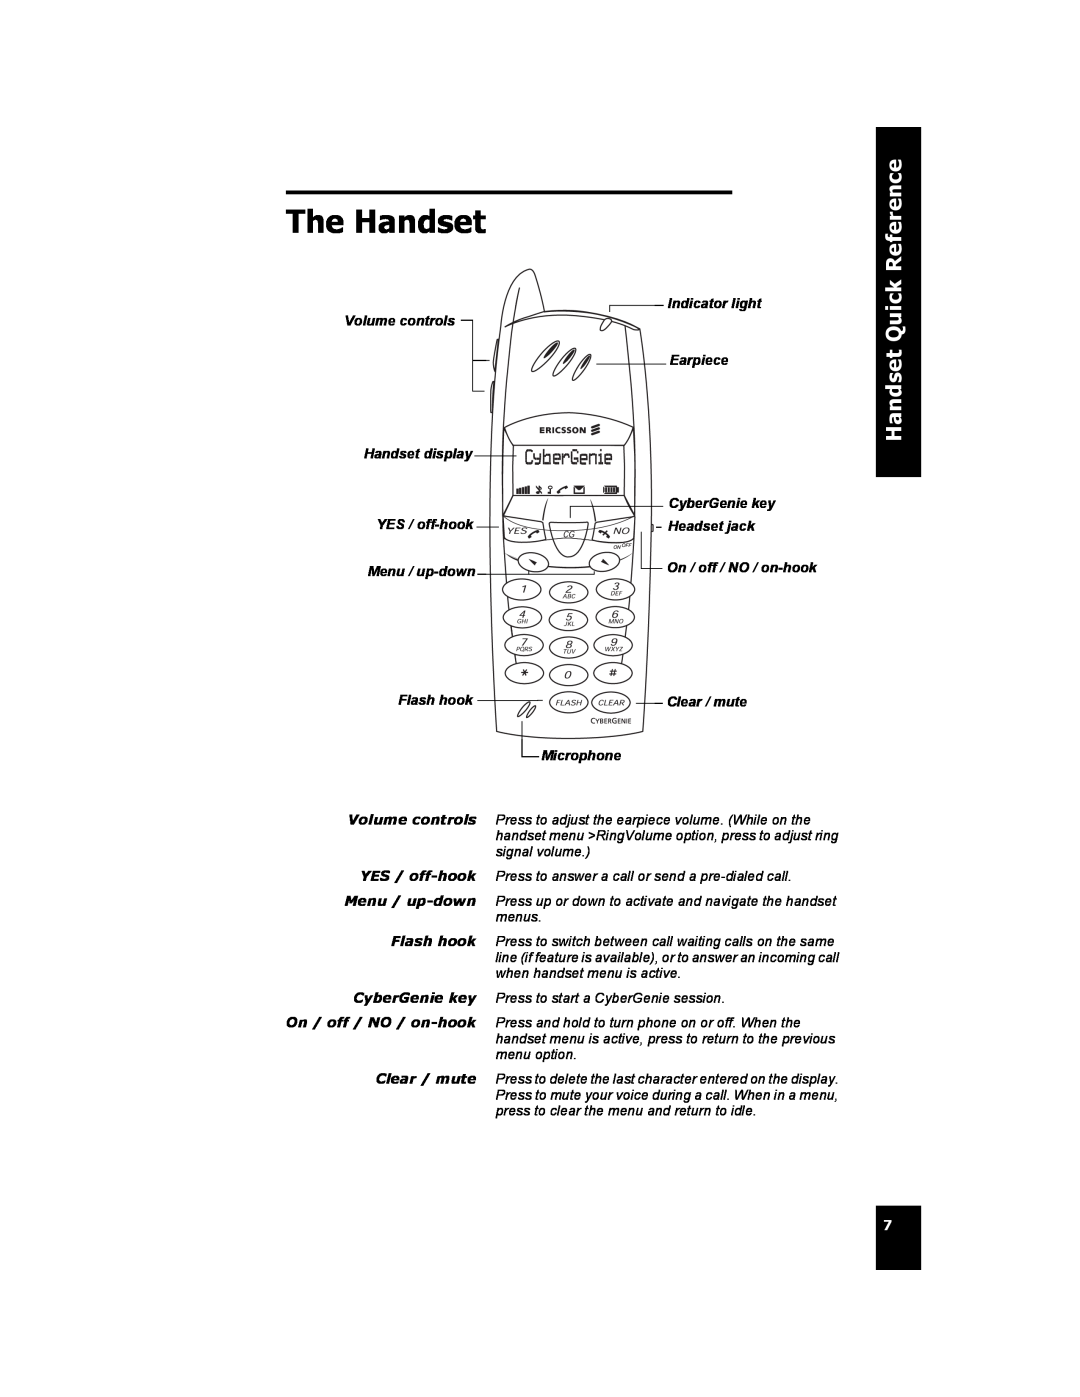 Cygnion CG 2400 manual The Handset, Reference, Handset Quick, Volume controls Handset display, Indicator light Earpiece 